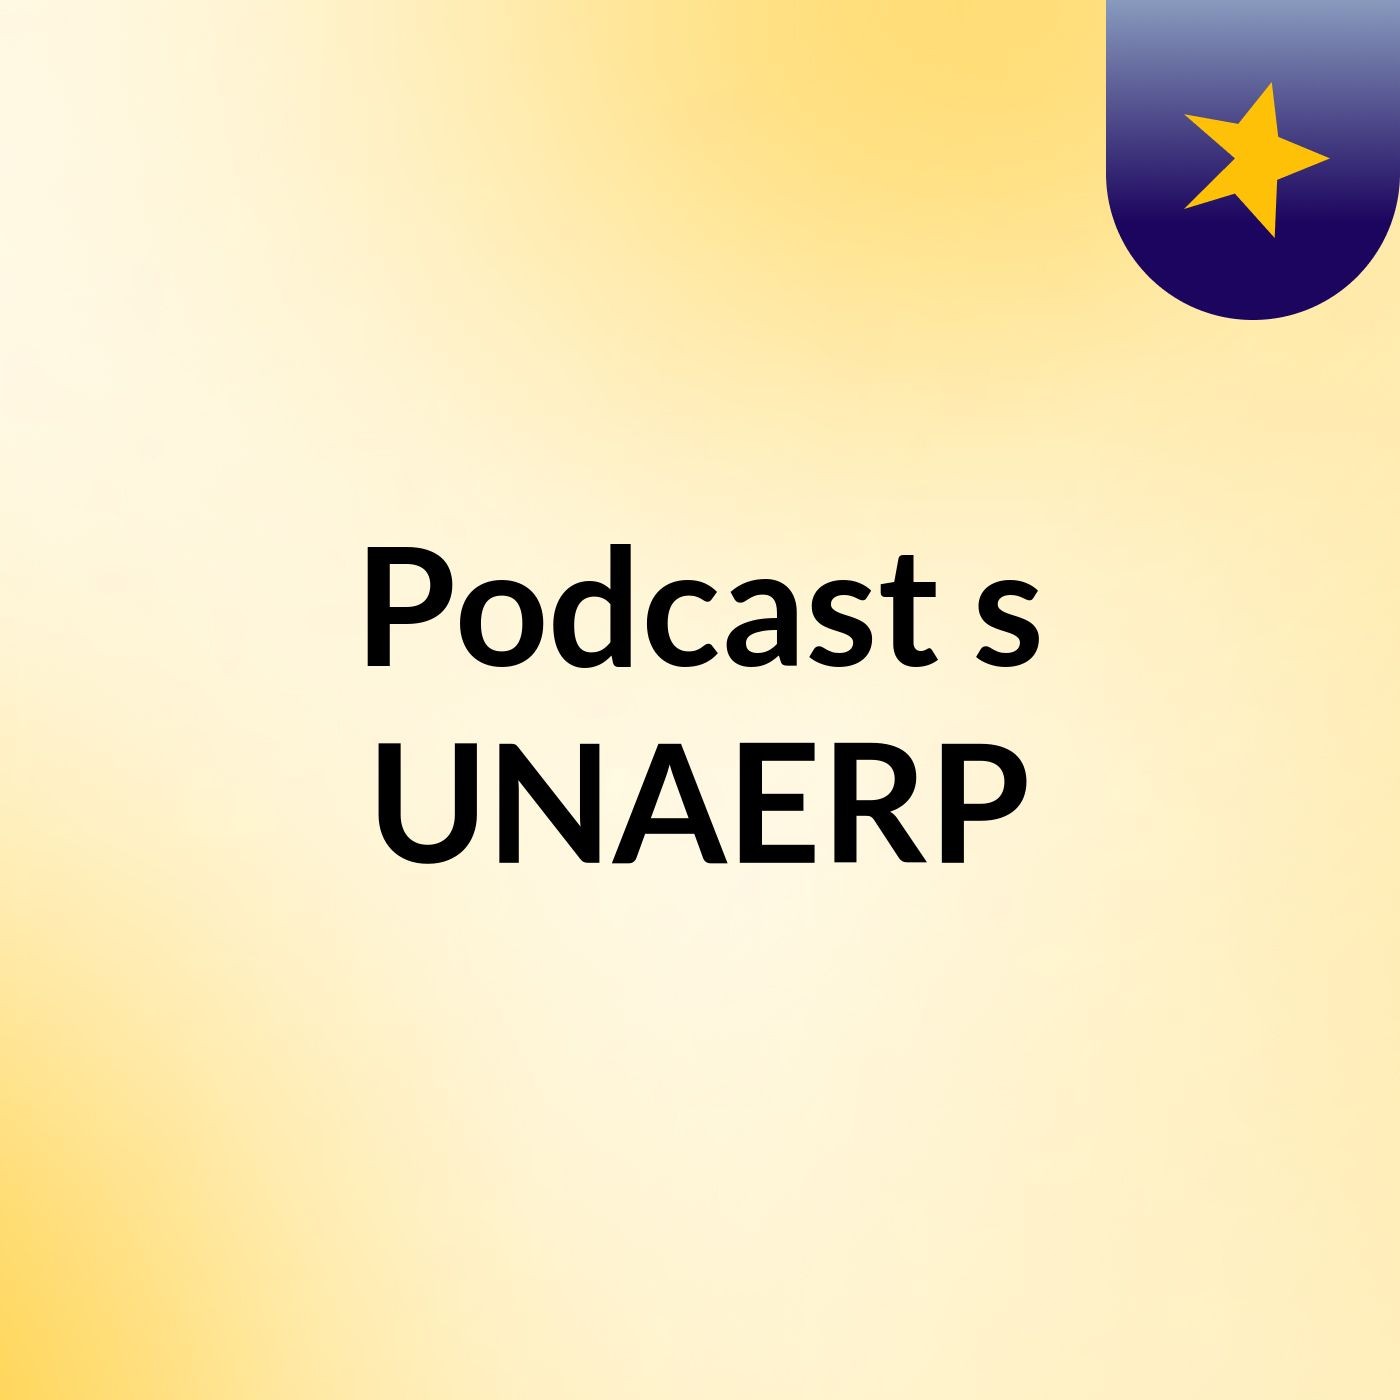 Podcast's UNAERP